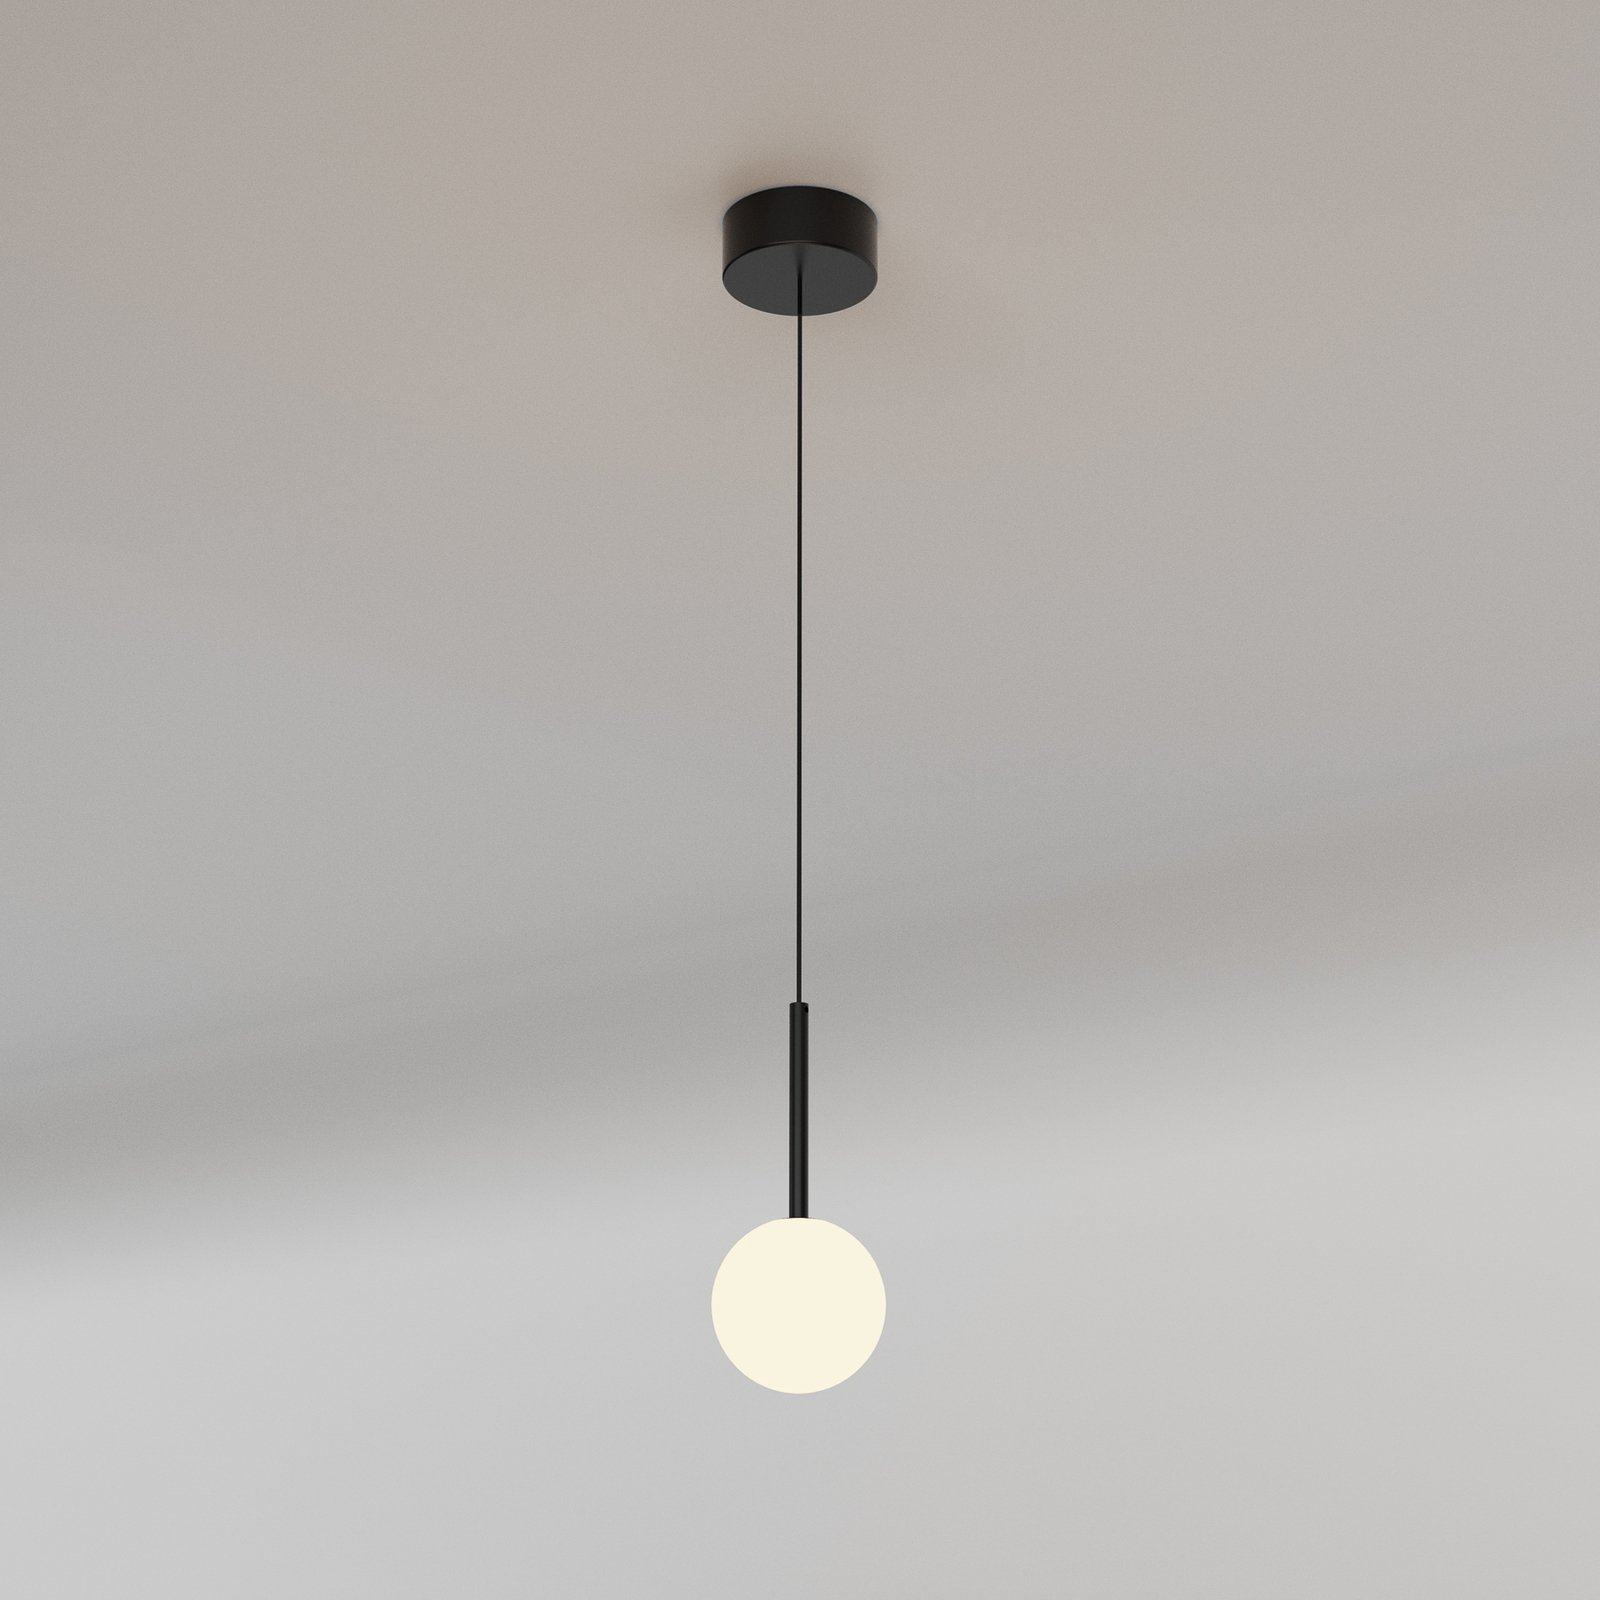 Kelder hanglamp, 1-lamp, ijzer, zwart, glas, wit